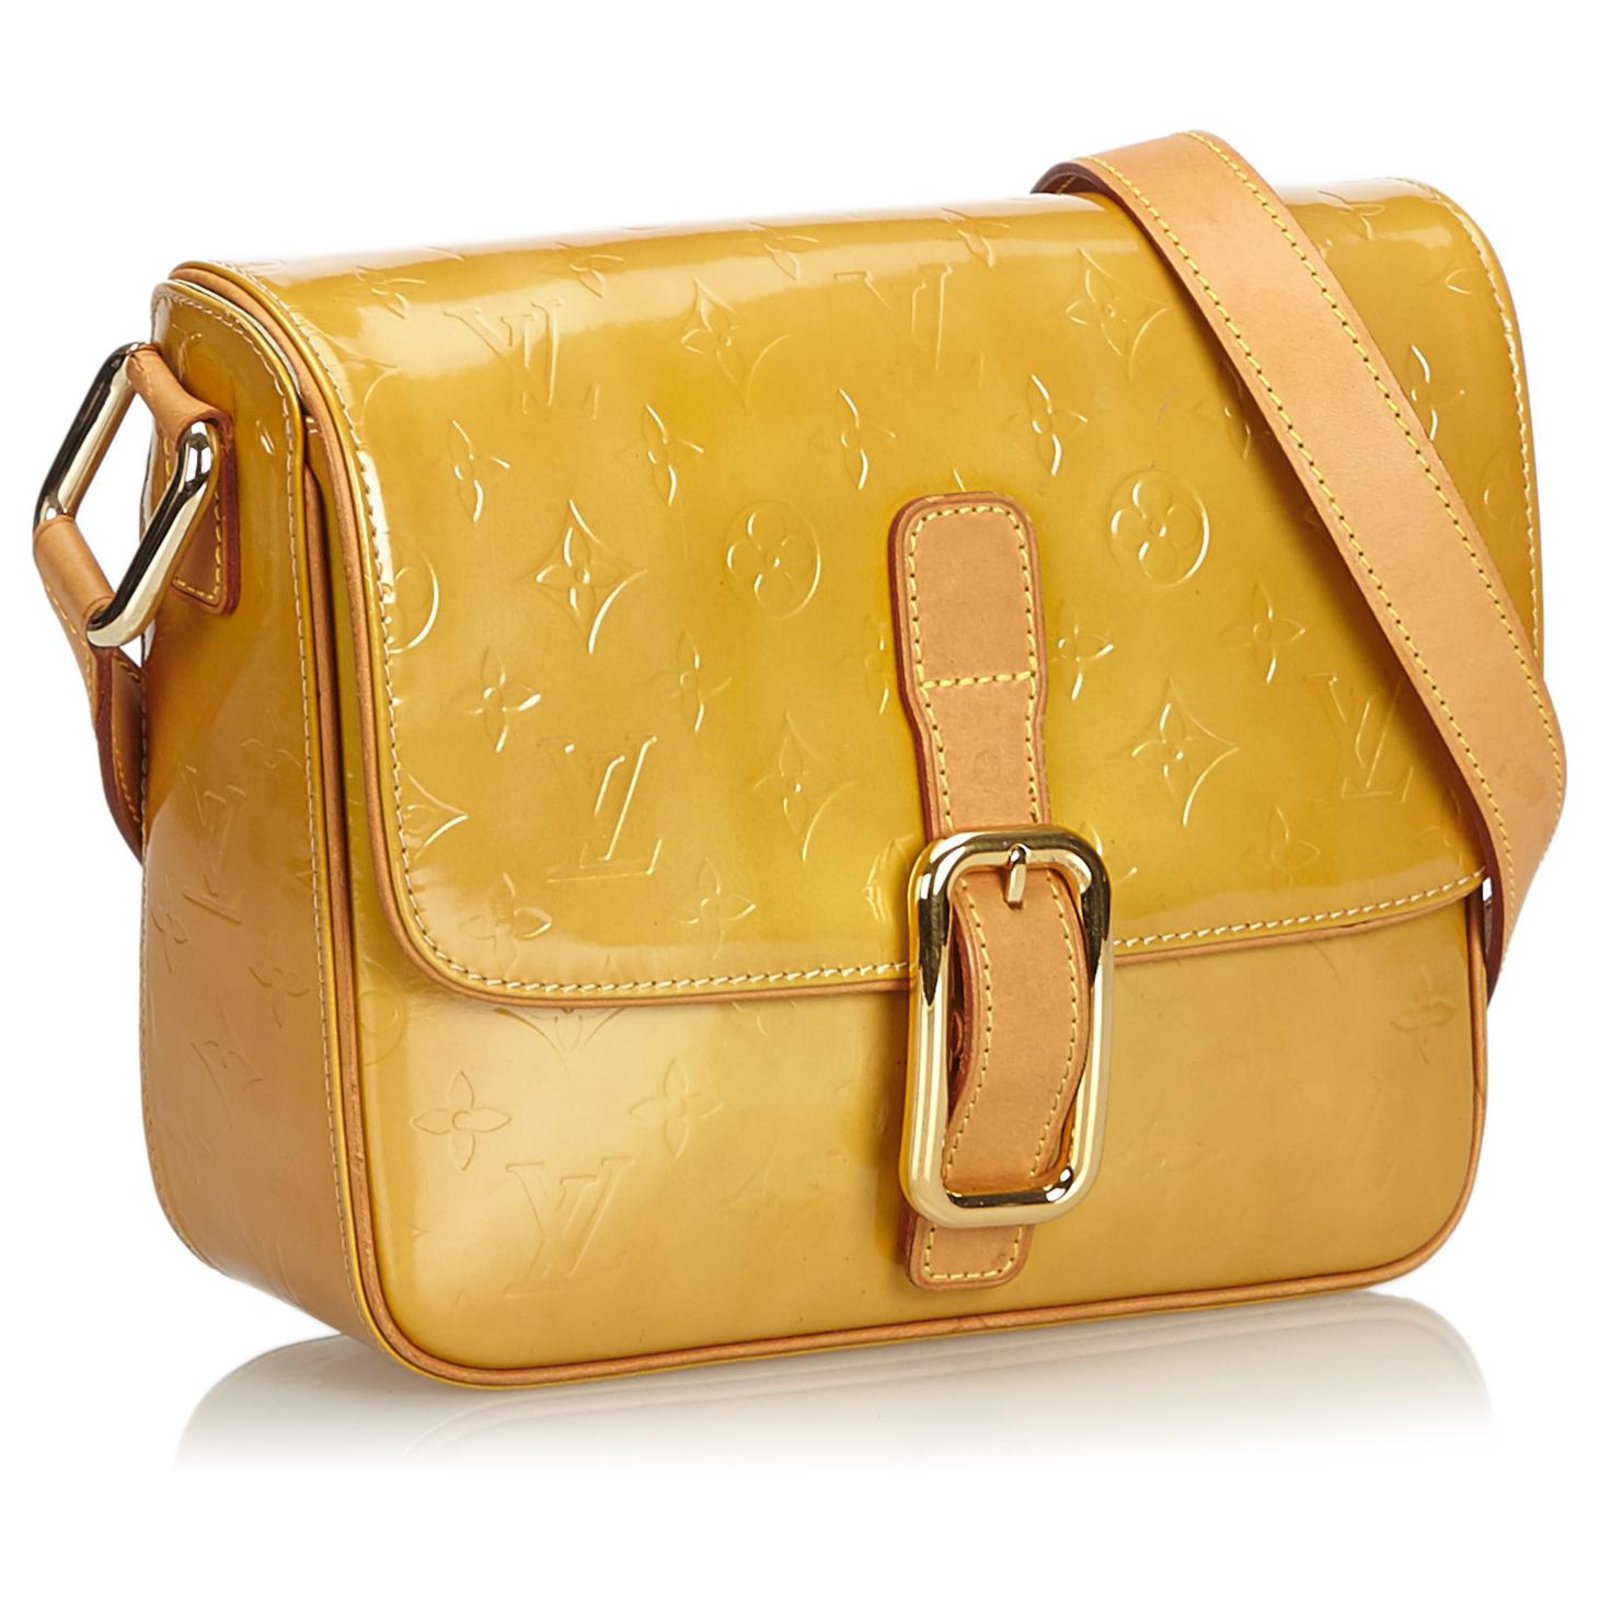 vachetta leather strap for louis vuitton beige yellow